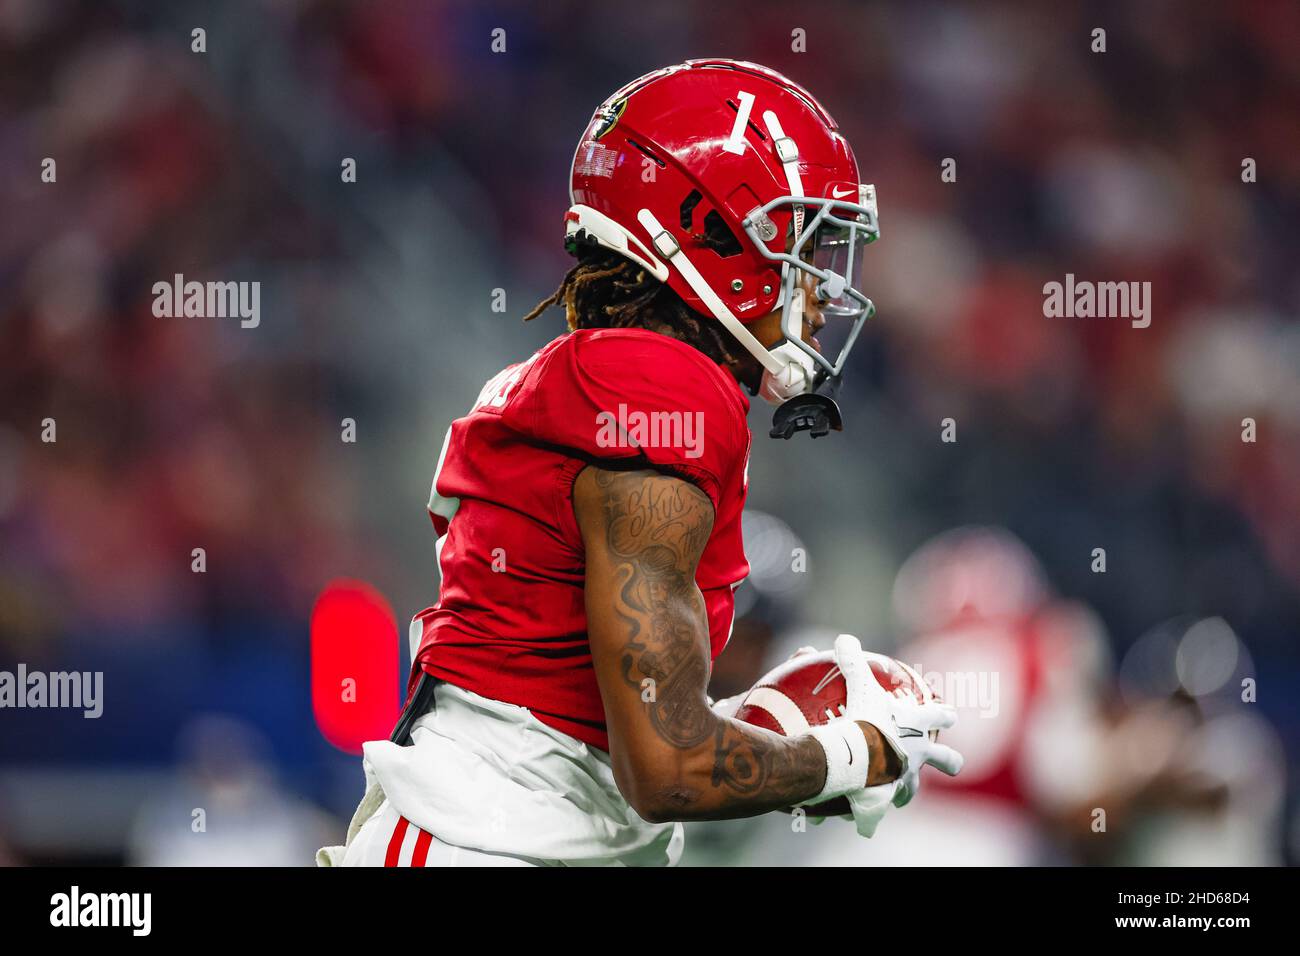 NFL Draft: Alabama's Jameson Williams' Detroit Lions jersey now